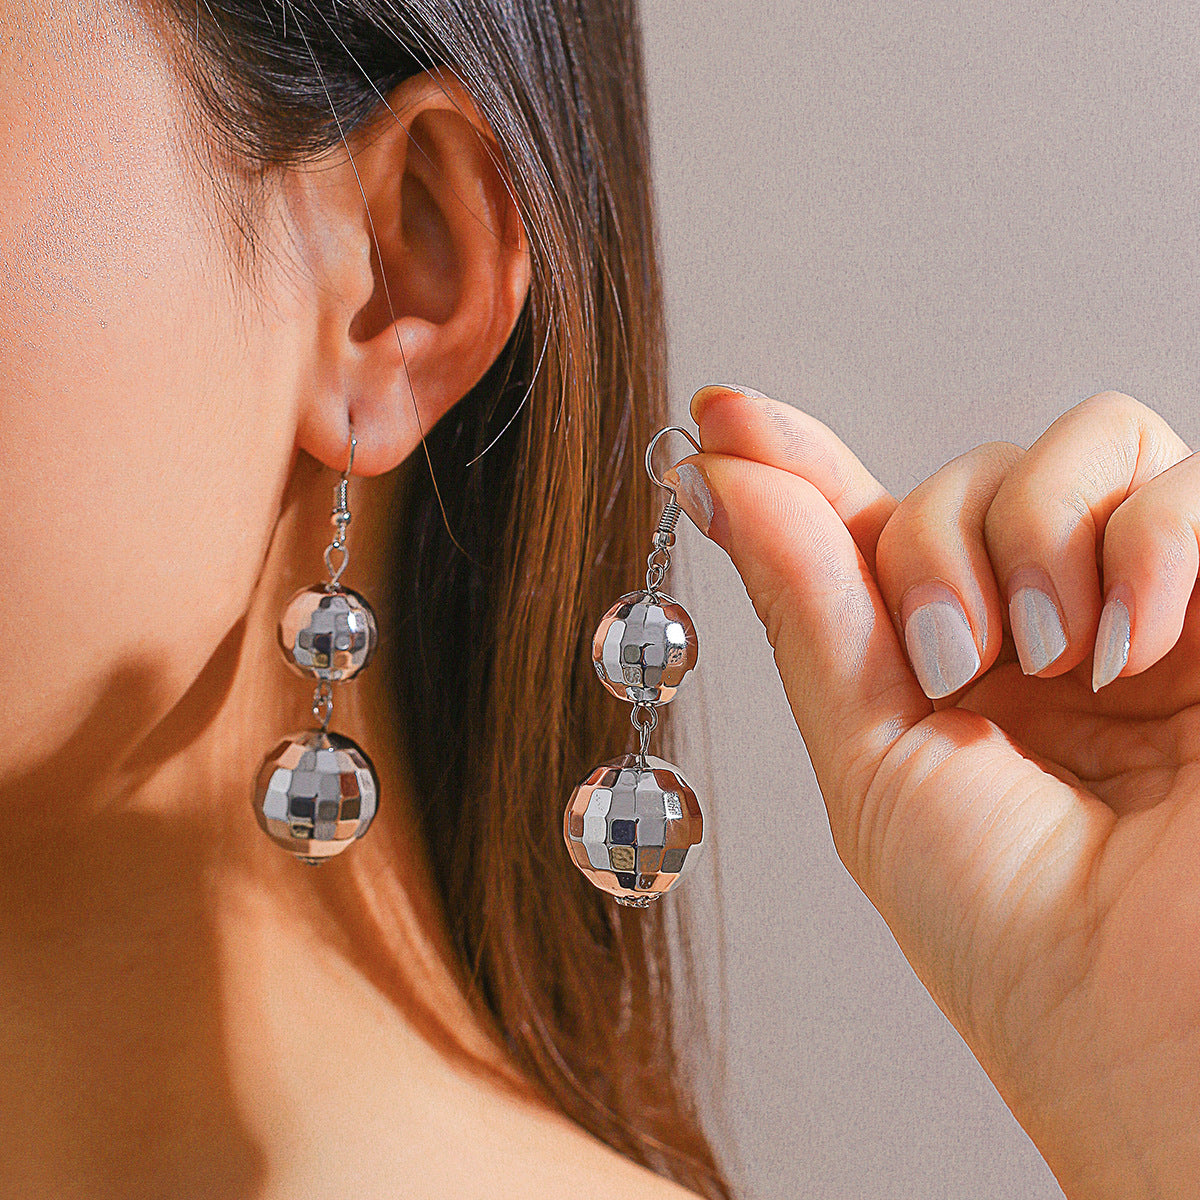 Disco Ball Lamp Round Beads Eardrops Stud Earrings Female Fashion